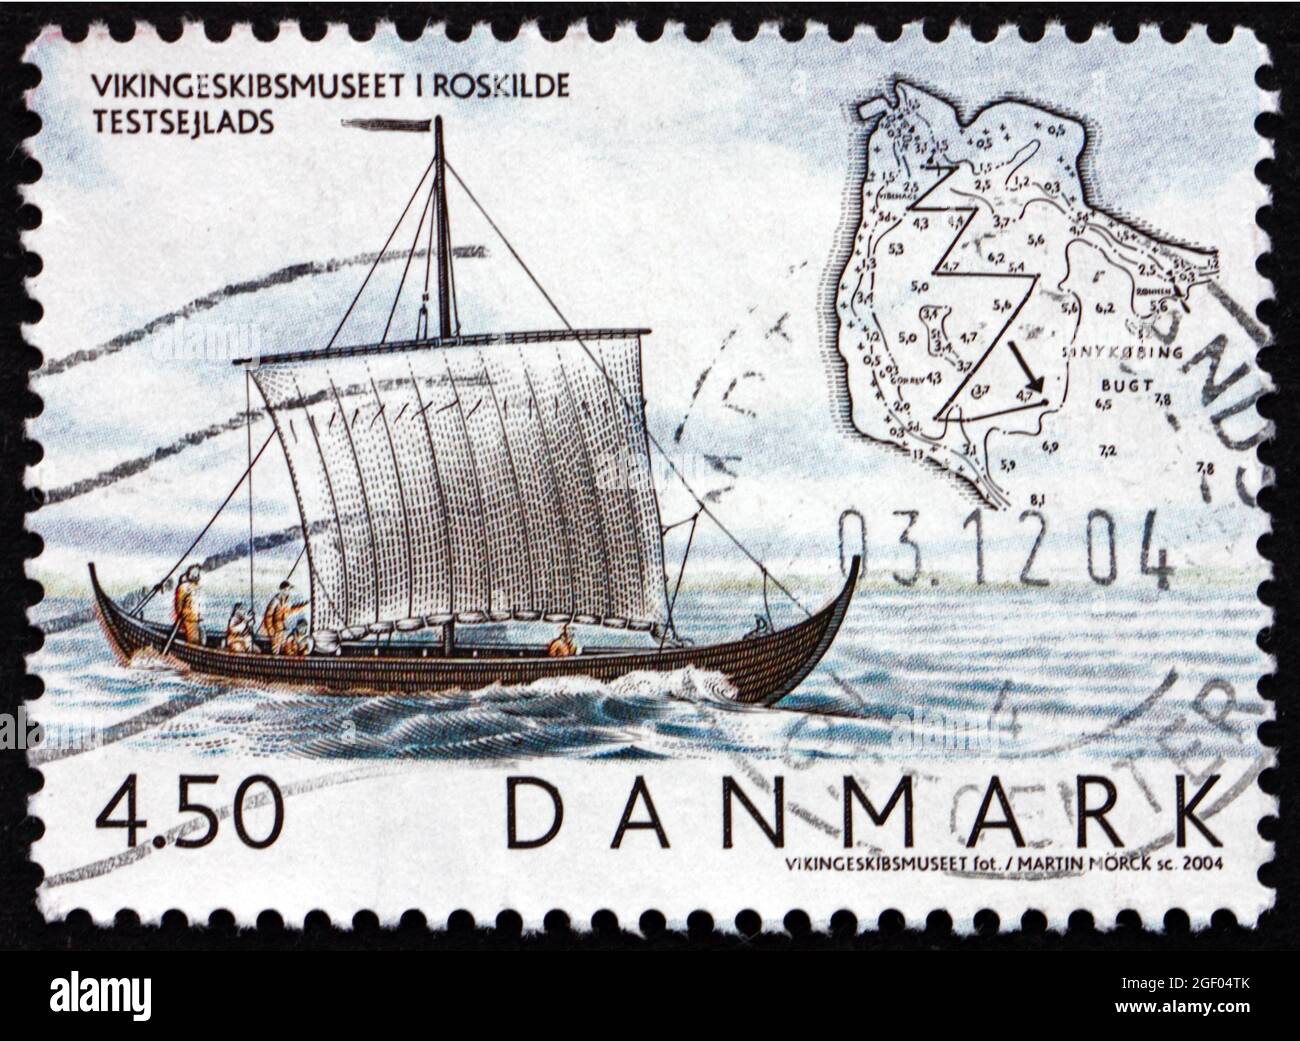 DANEMARK - VERS 2004 : un timbre imprimé au Danemark montre Skuldelev 1 sur le fjord Roskilde, Musée des navires vikings, Roskilde, vers 2004 Banque D'Images